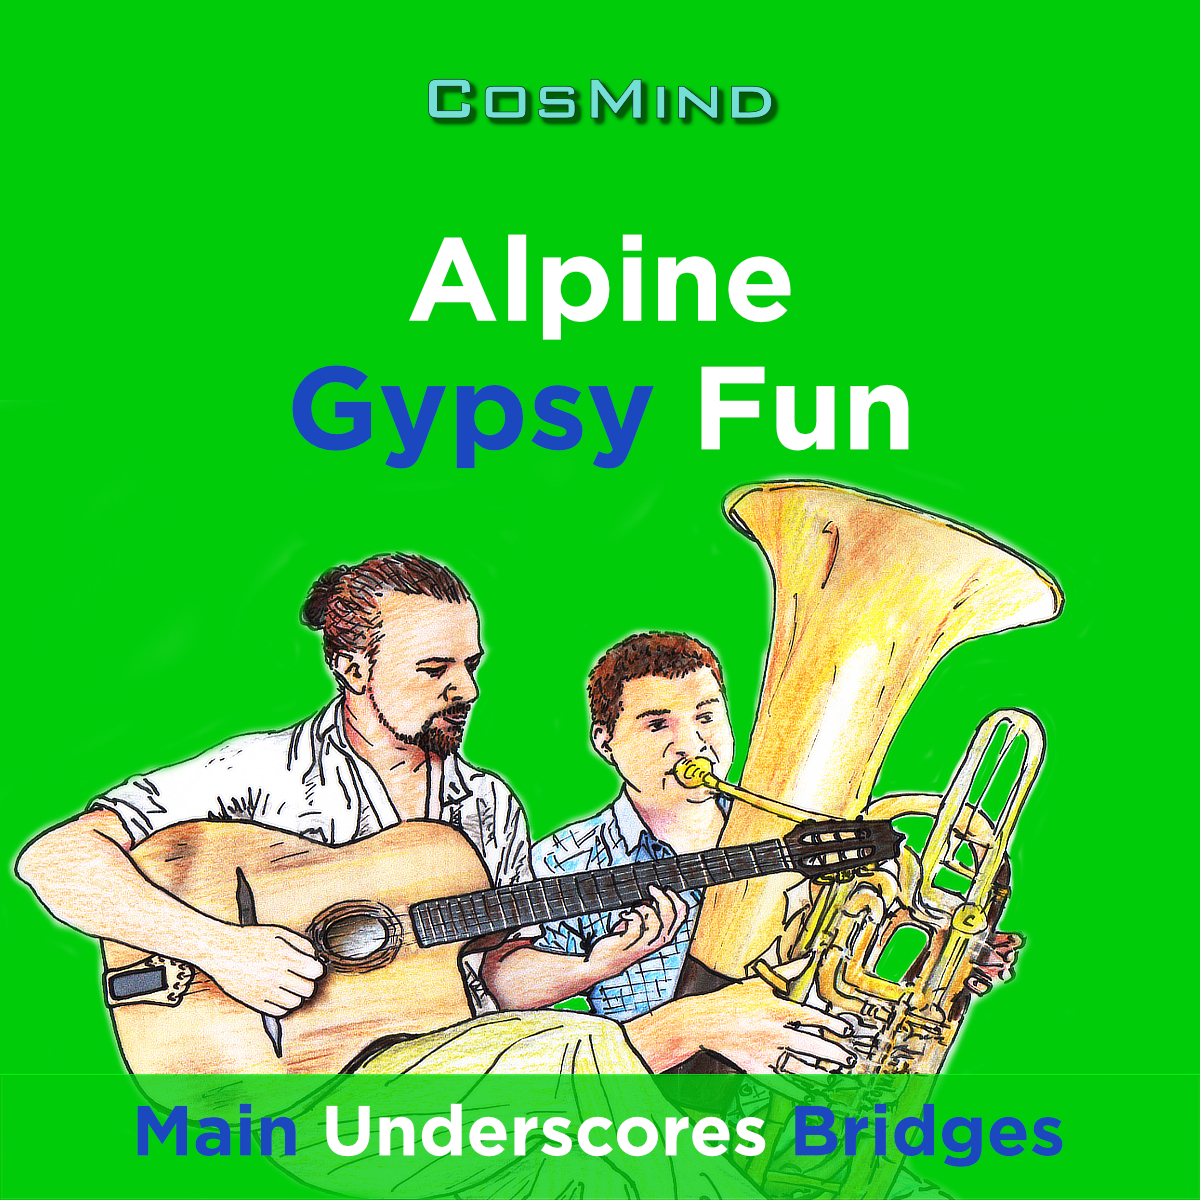 Alpine Gypsy Fun - Main - Underscores - Bridges